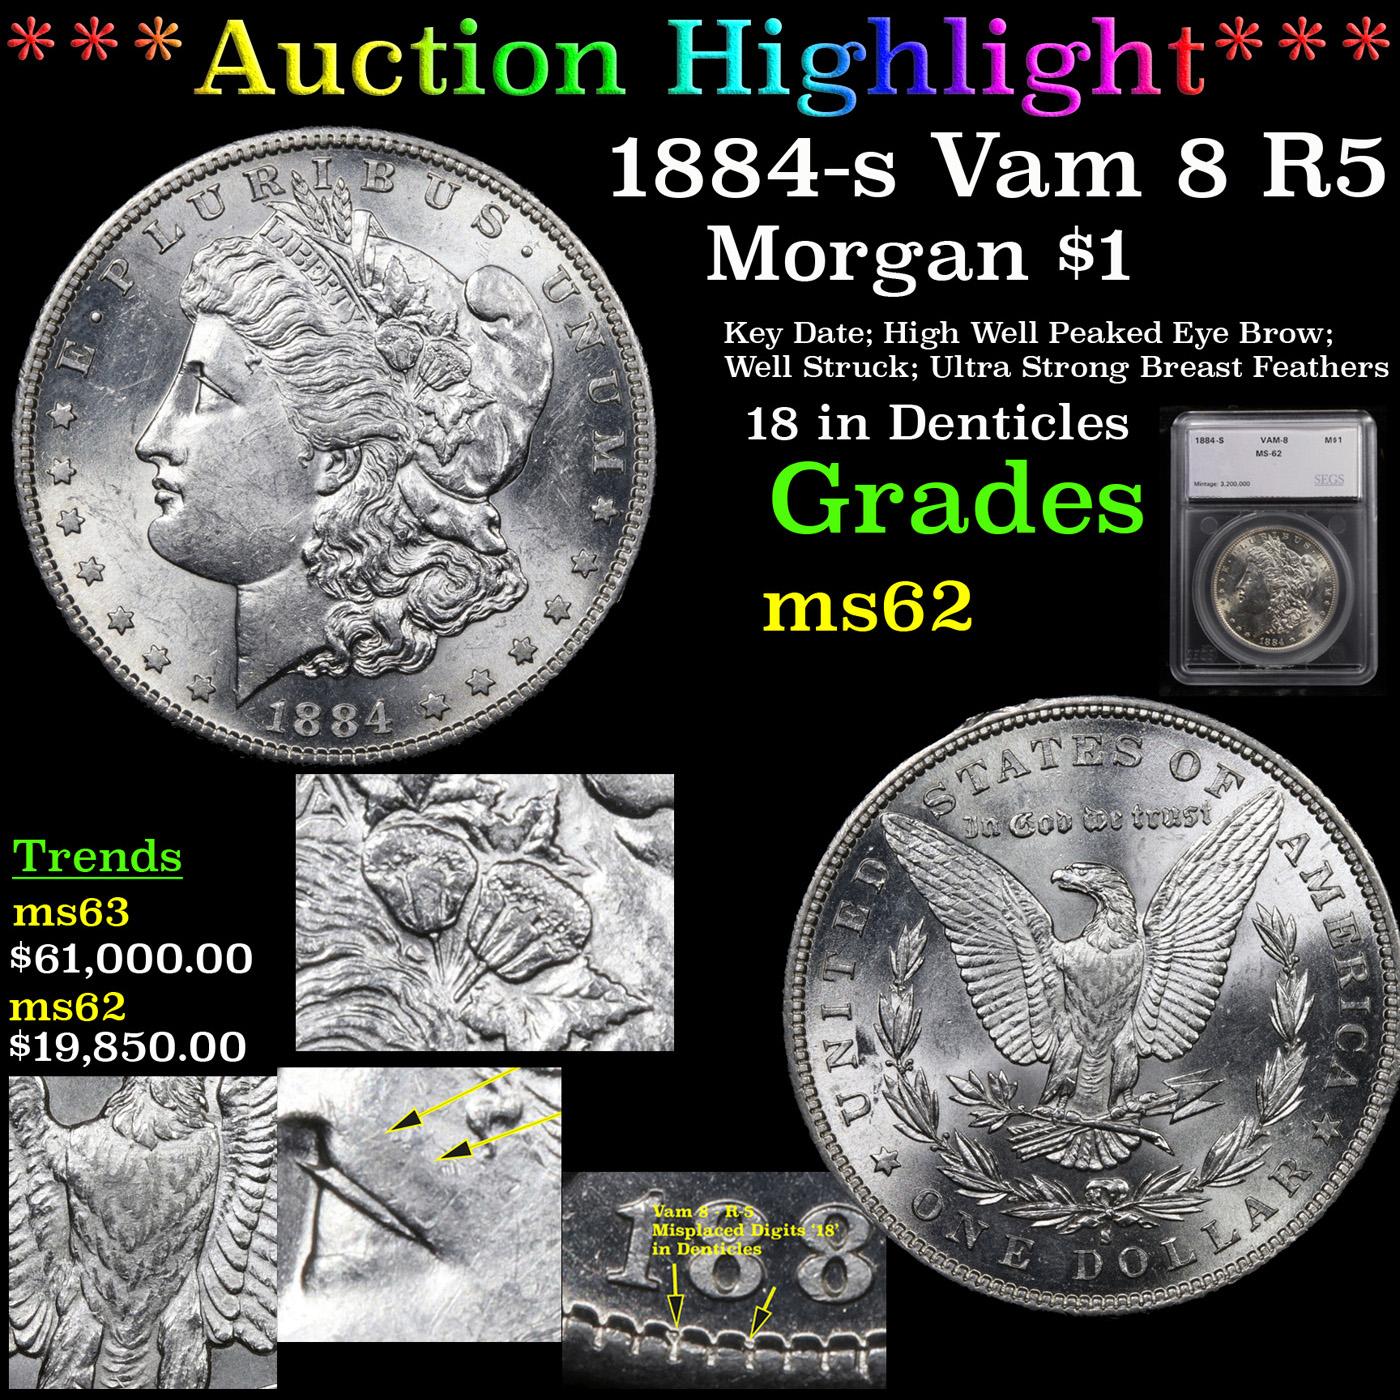 *Highlight Of Entire Auction* 1884-s Vam 8 R5 Morgan Dollar $1 Graded ms62 By SEGS (fc)